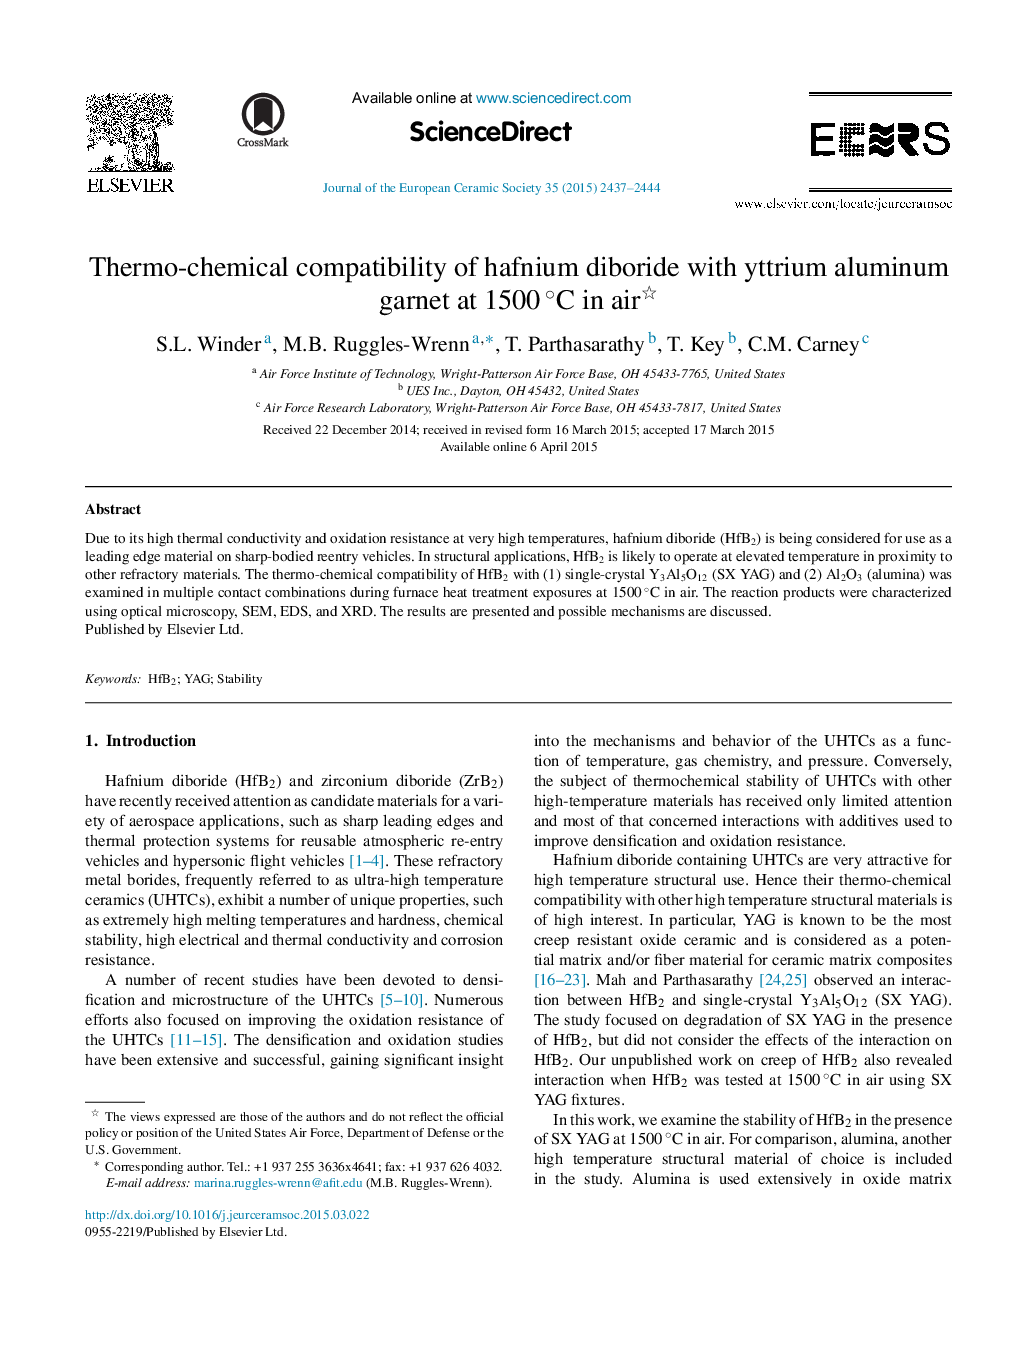 Thermo-chemical compatibility of hafnium diboride with yttrium aluminum garnet at 1500Â Â°C in air